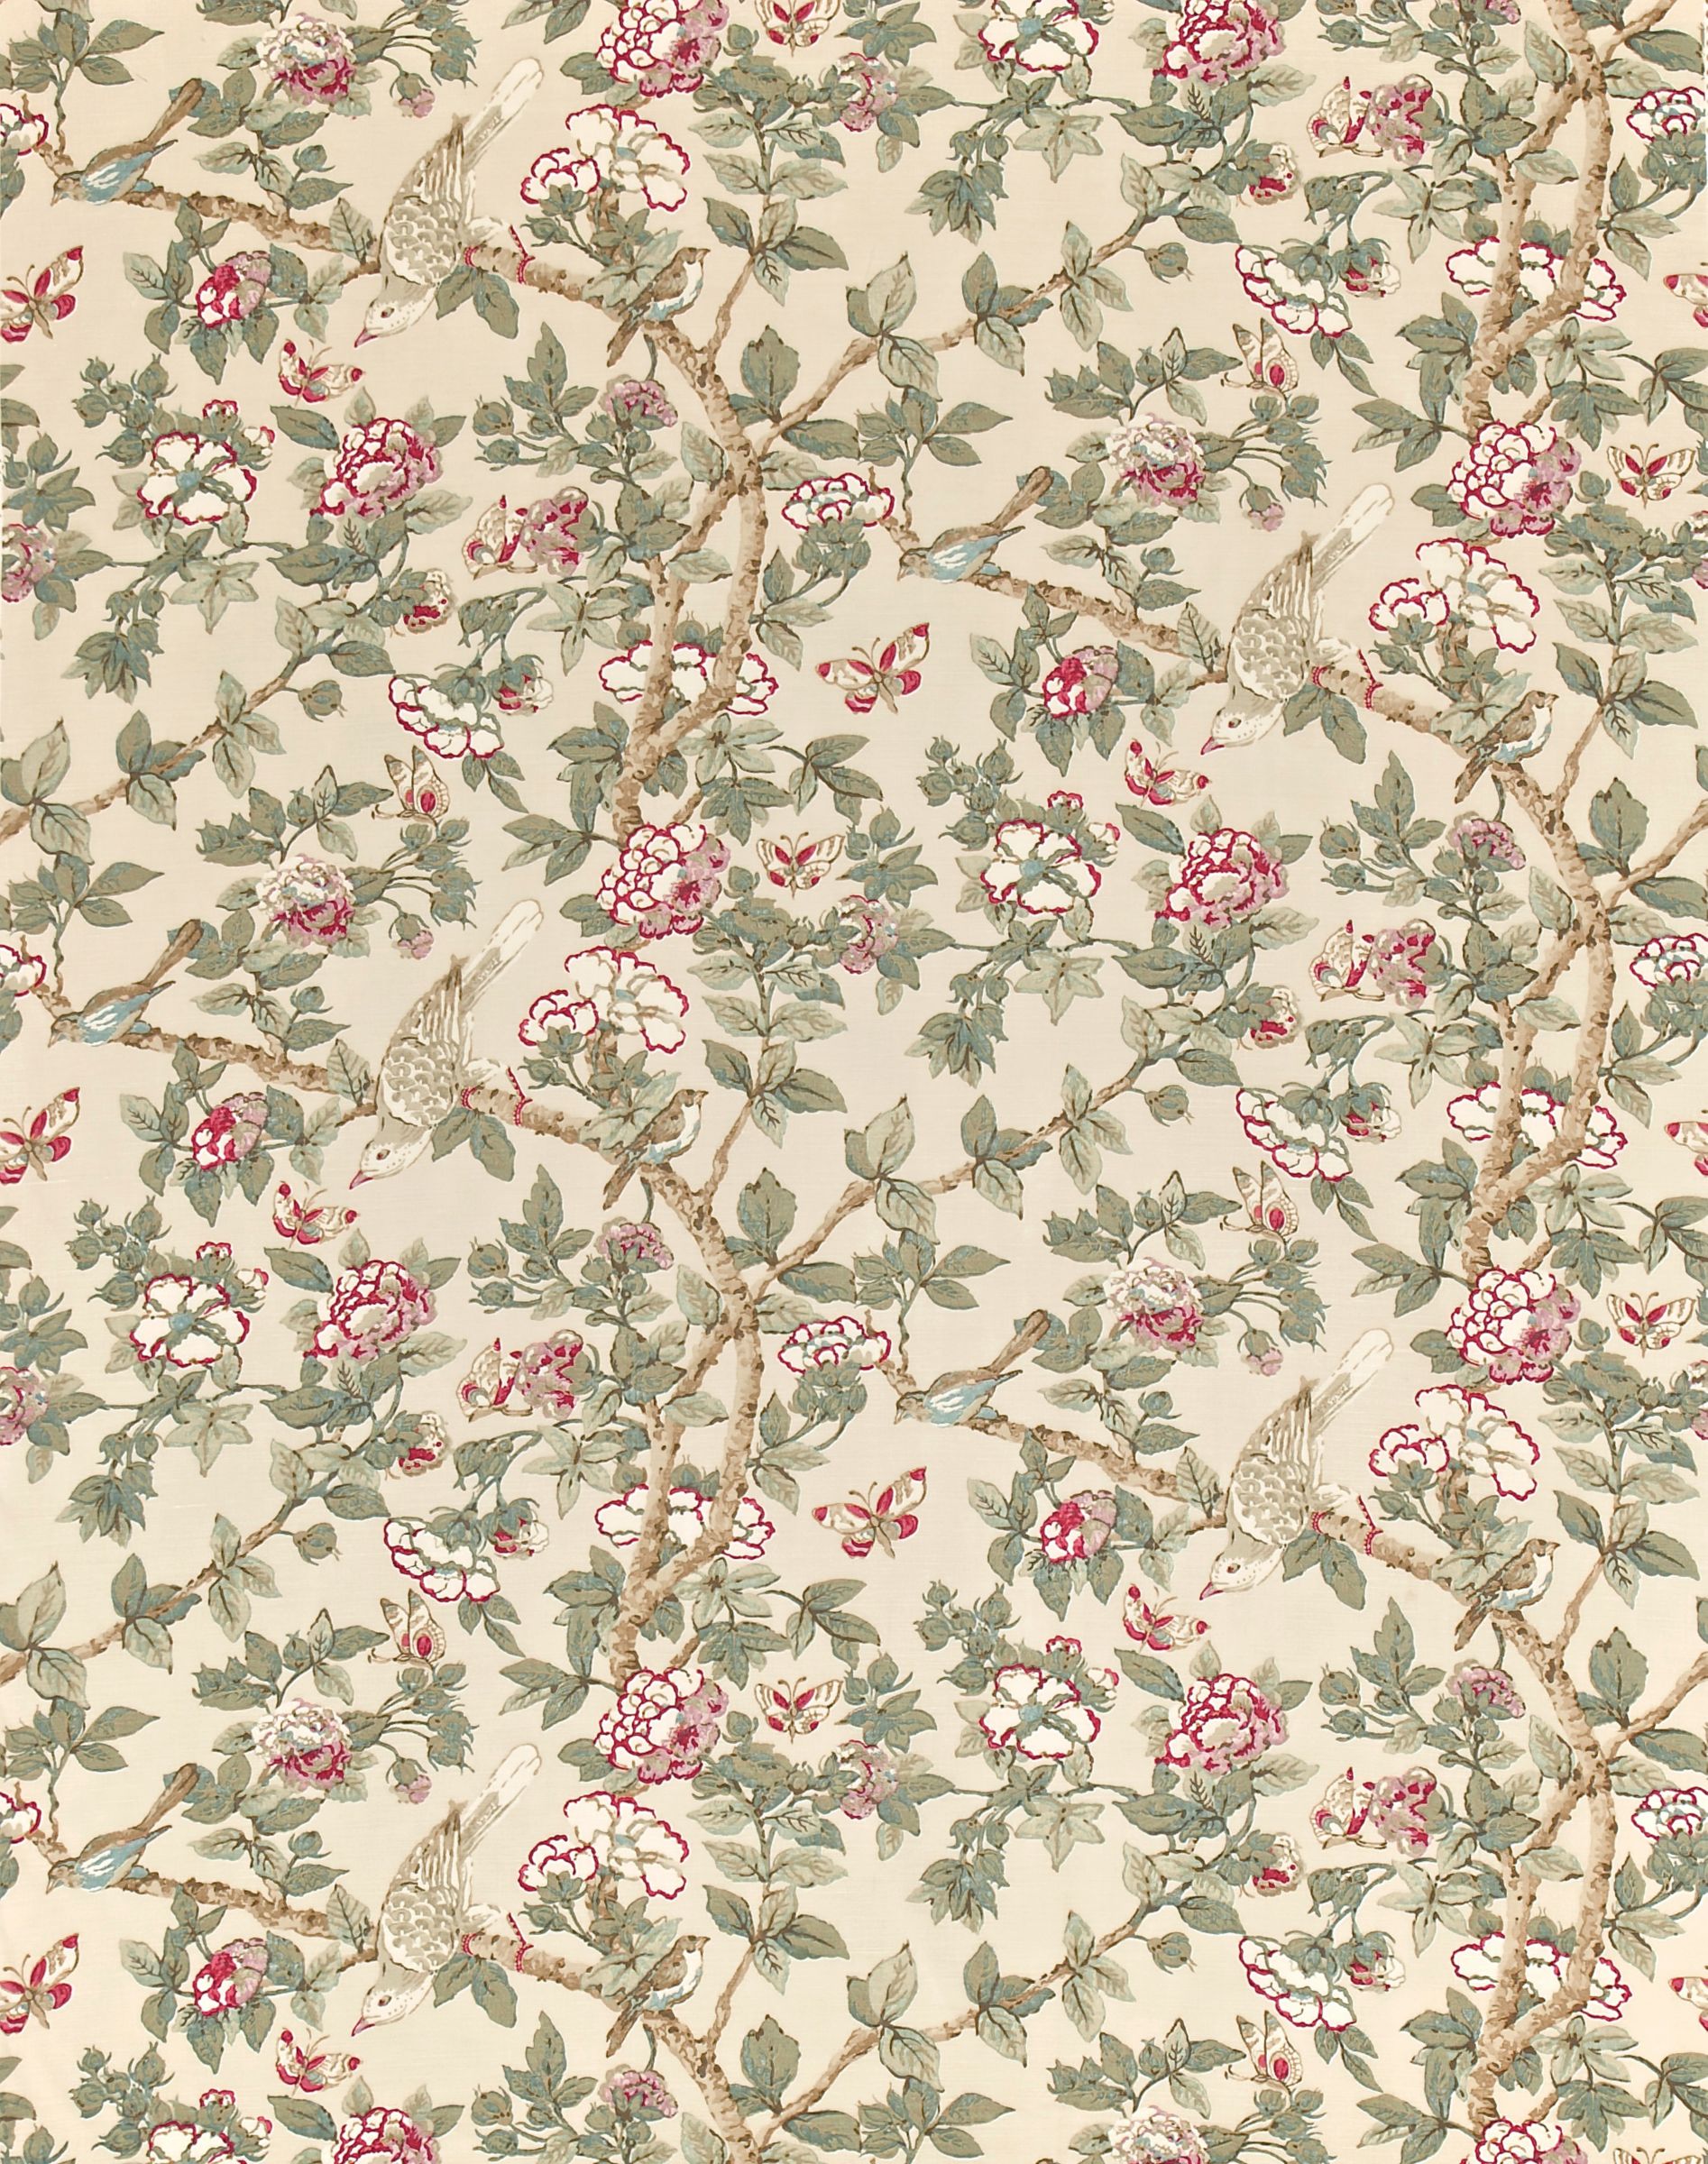 Sanderson Caverley Rose Furnishing Fabric, Rose/Pewter